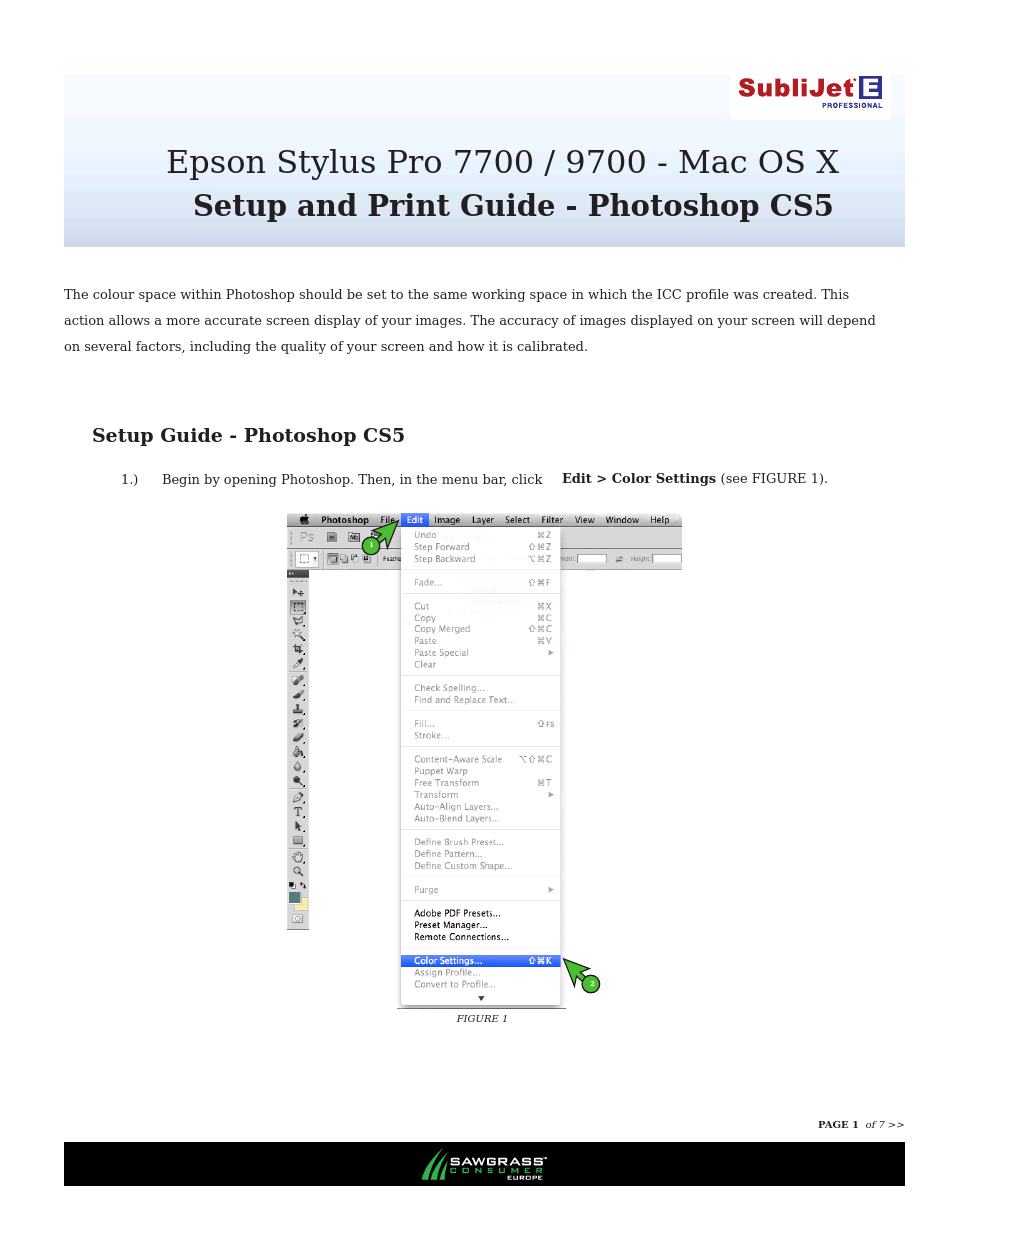 SubliJet E Epson Stylus Pro 7700 (Mac ICC Profile Setup): Print & Setup Guide Photoshop CS5